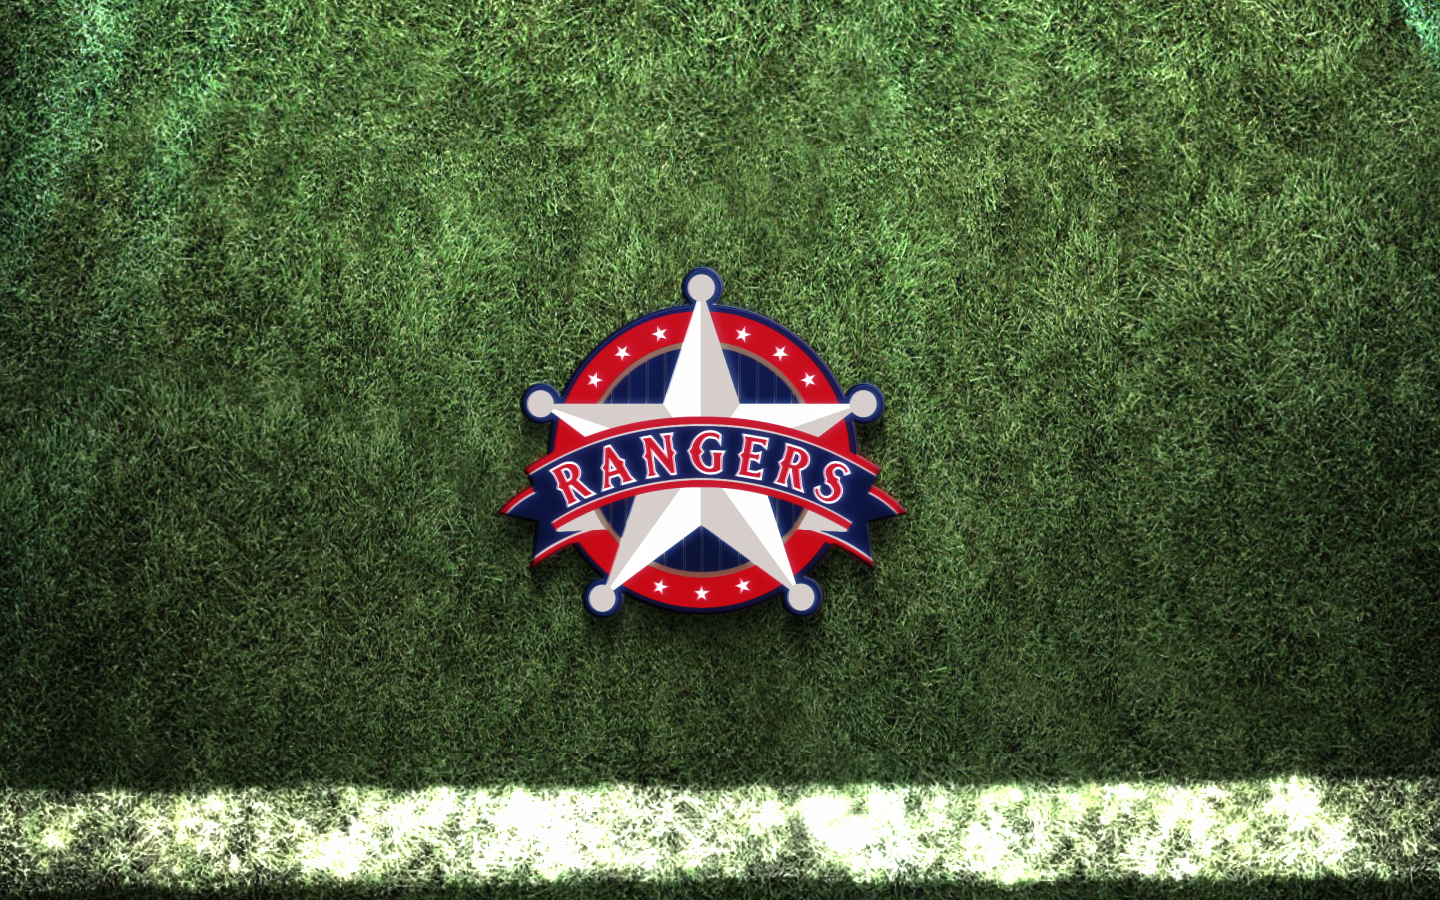 Texas Rangers wallpaper by JeremyNeal1 - Download on ZEDGE™